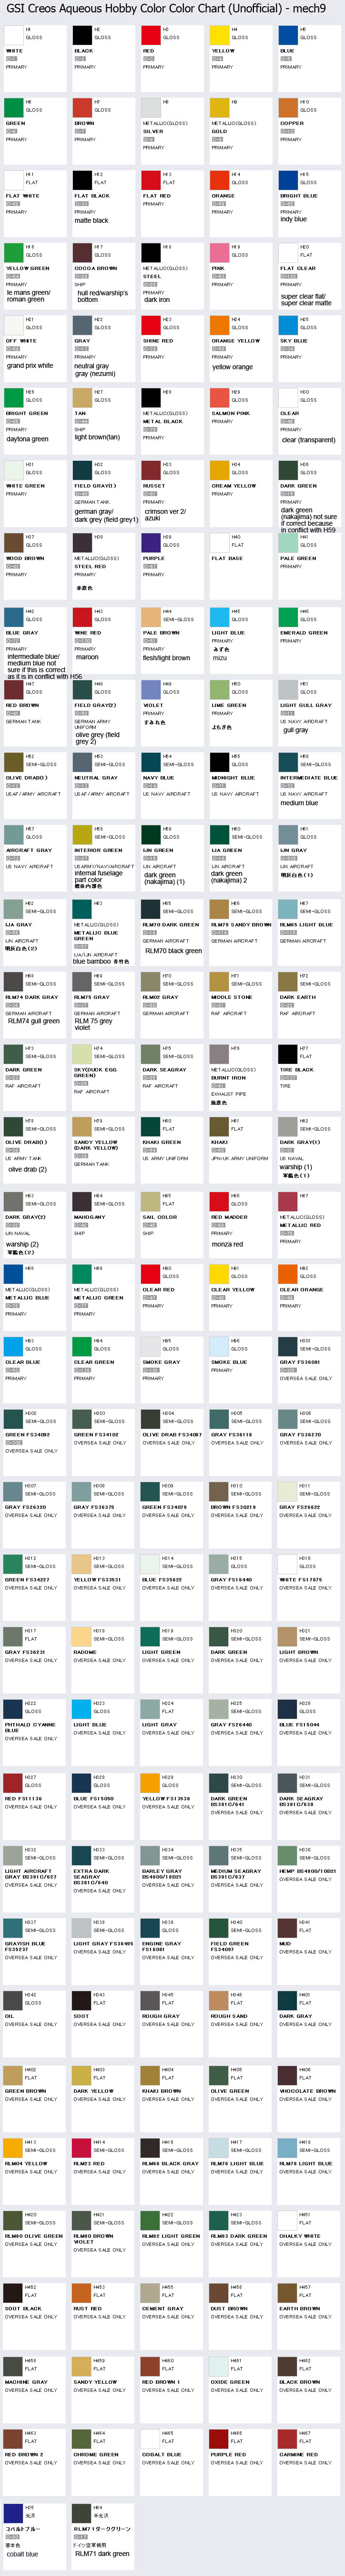 Aqueous Hobby Color Conversion Chart